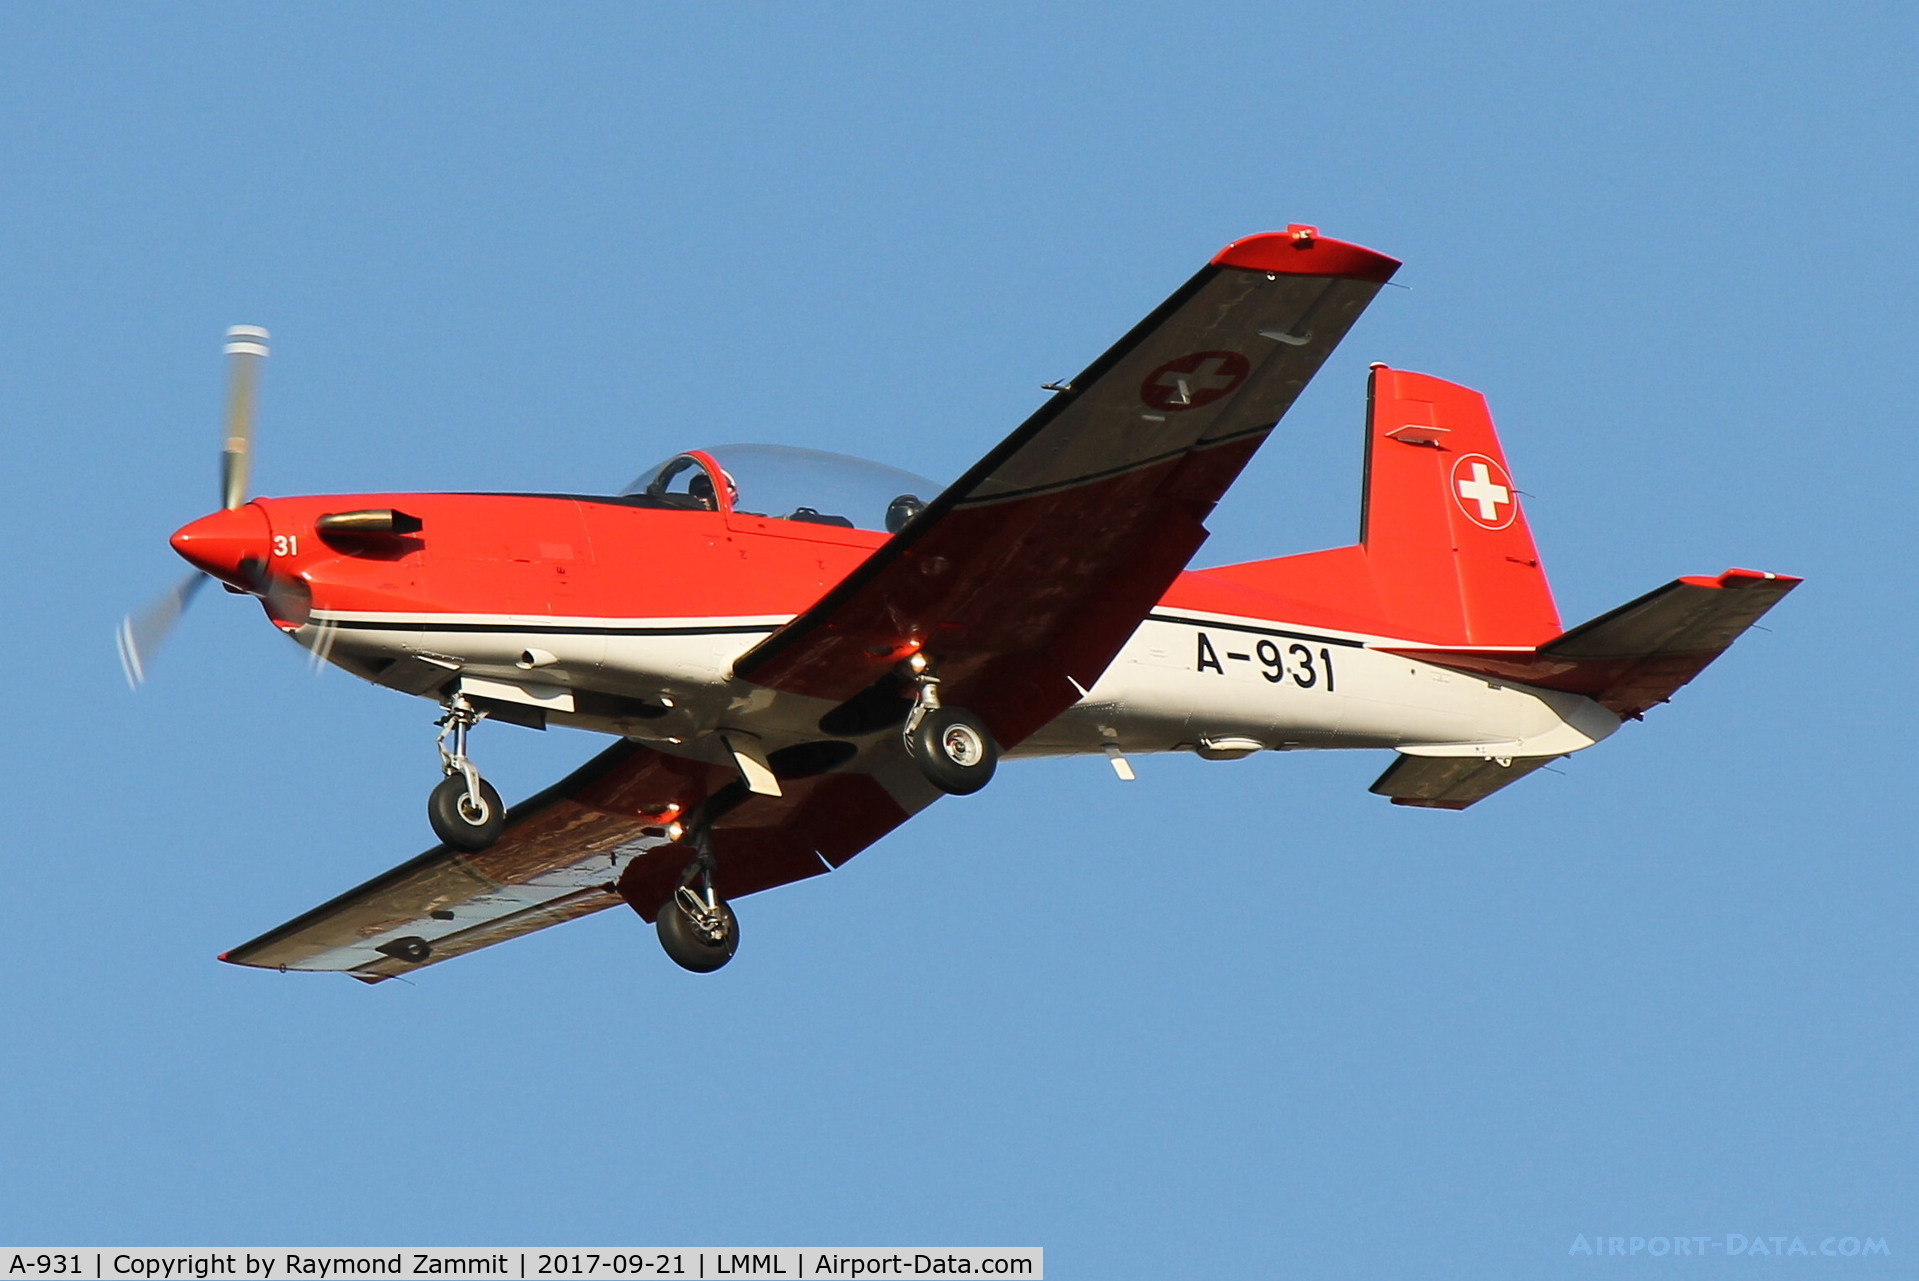 A-931, 1983 Pilatus PC-7 Turbo Trainer C/N 339, Pilatus PC-7 A-931 Swiss Air Force